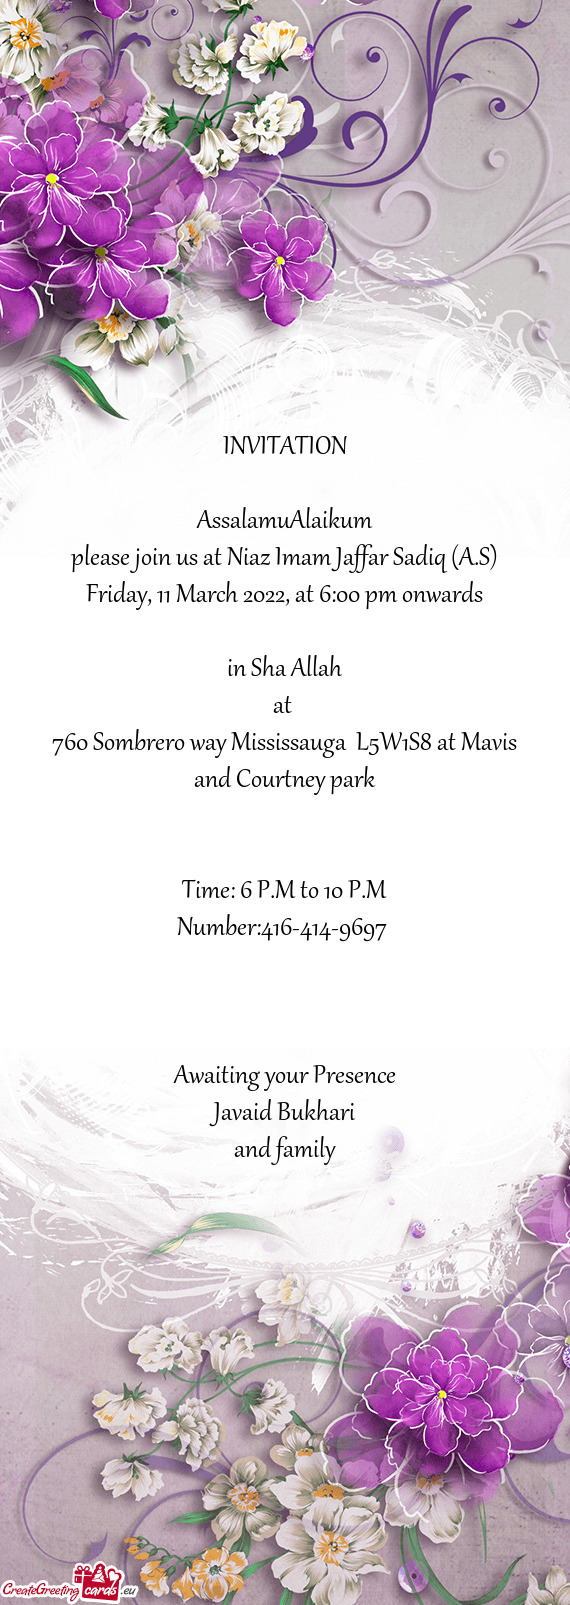 Please join us at Niaz Imam Jaffar Sadiq (A.S)